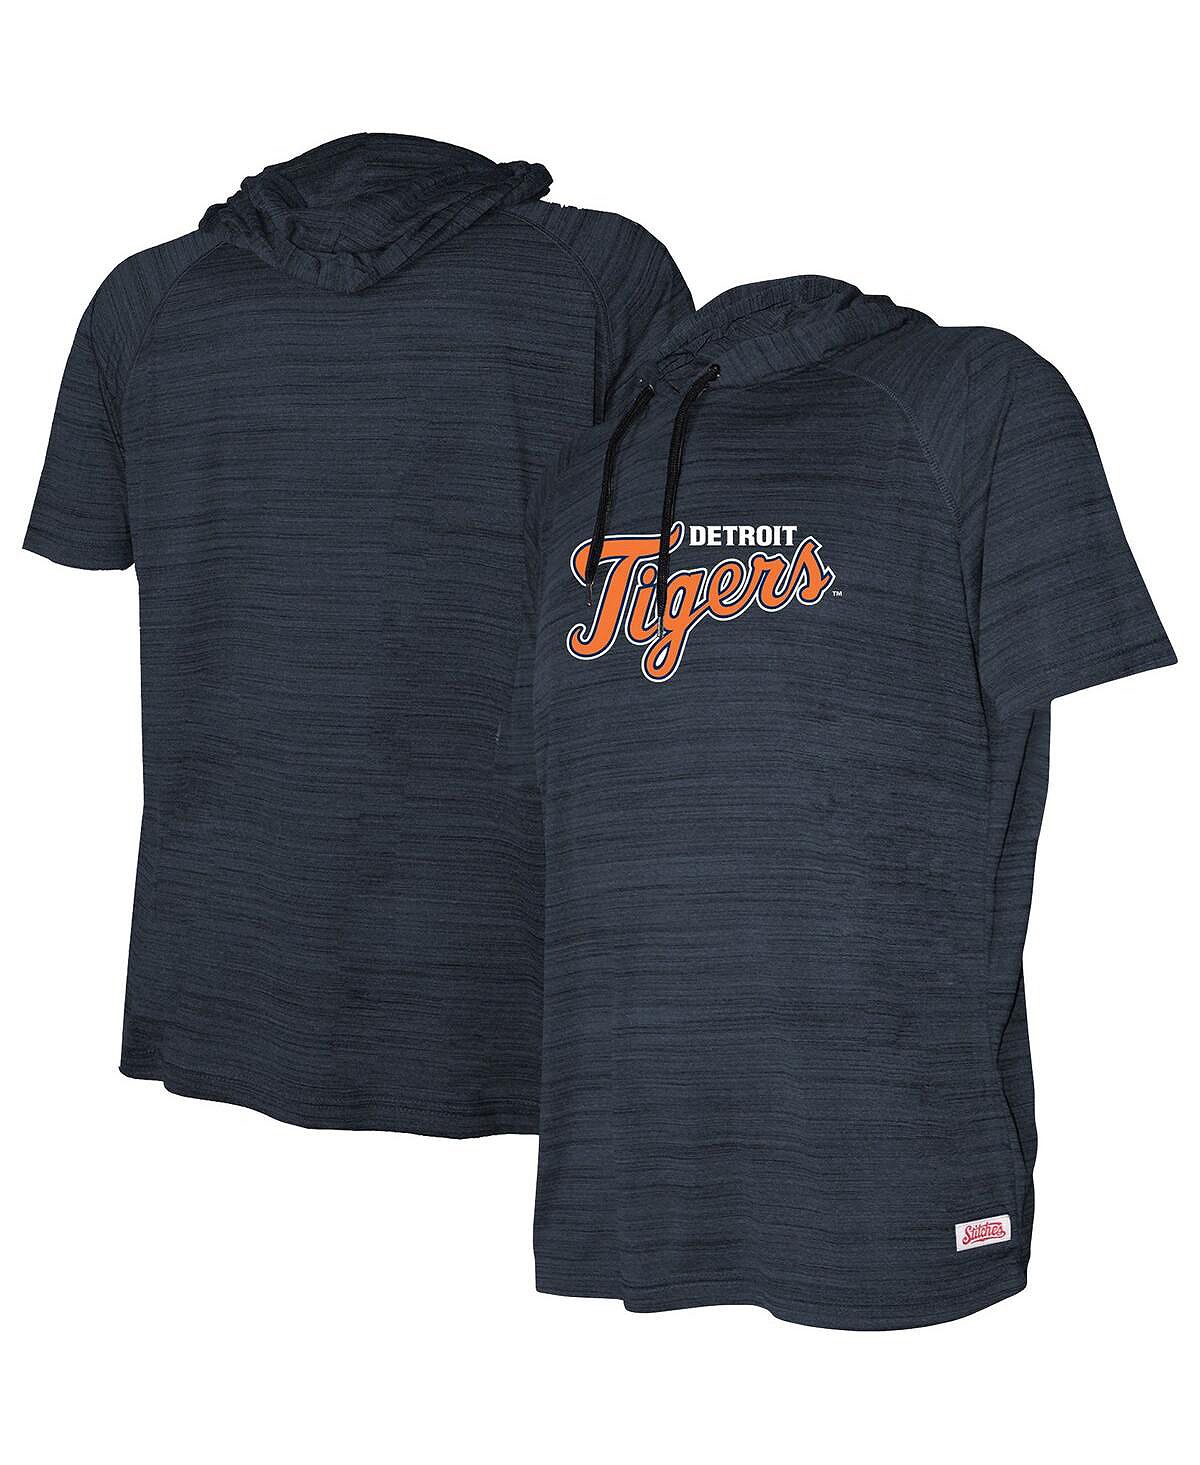 Пуловер с короткими рукавами и короткими рукавами Big Boys Heather Detroit Tigers с капюшоном и принтом Detroit Tigers Stitches цена и фото